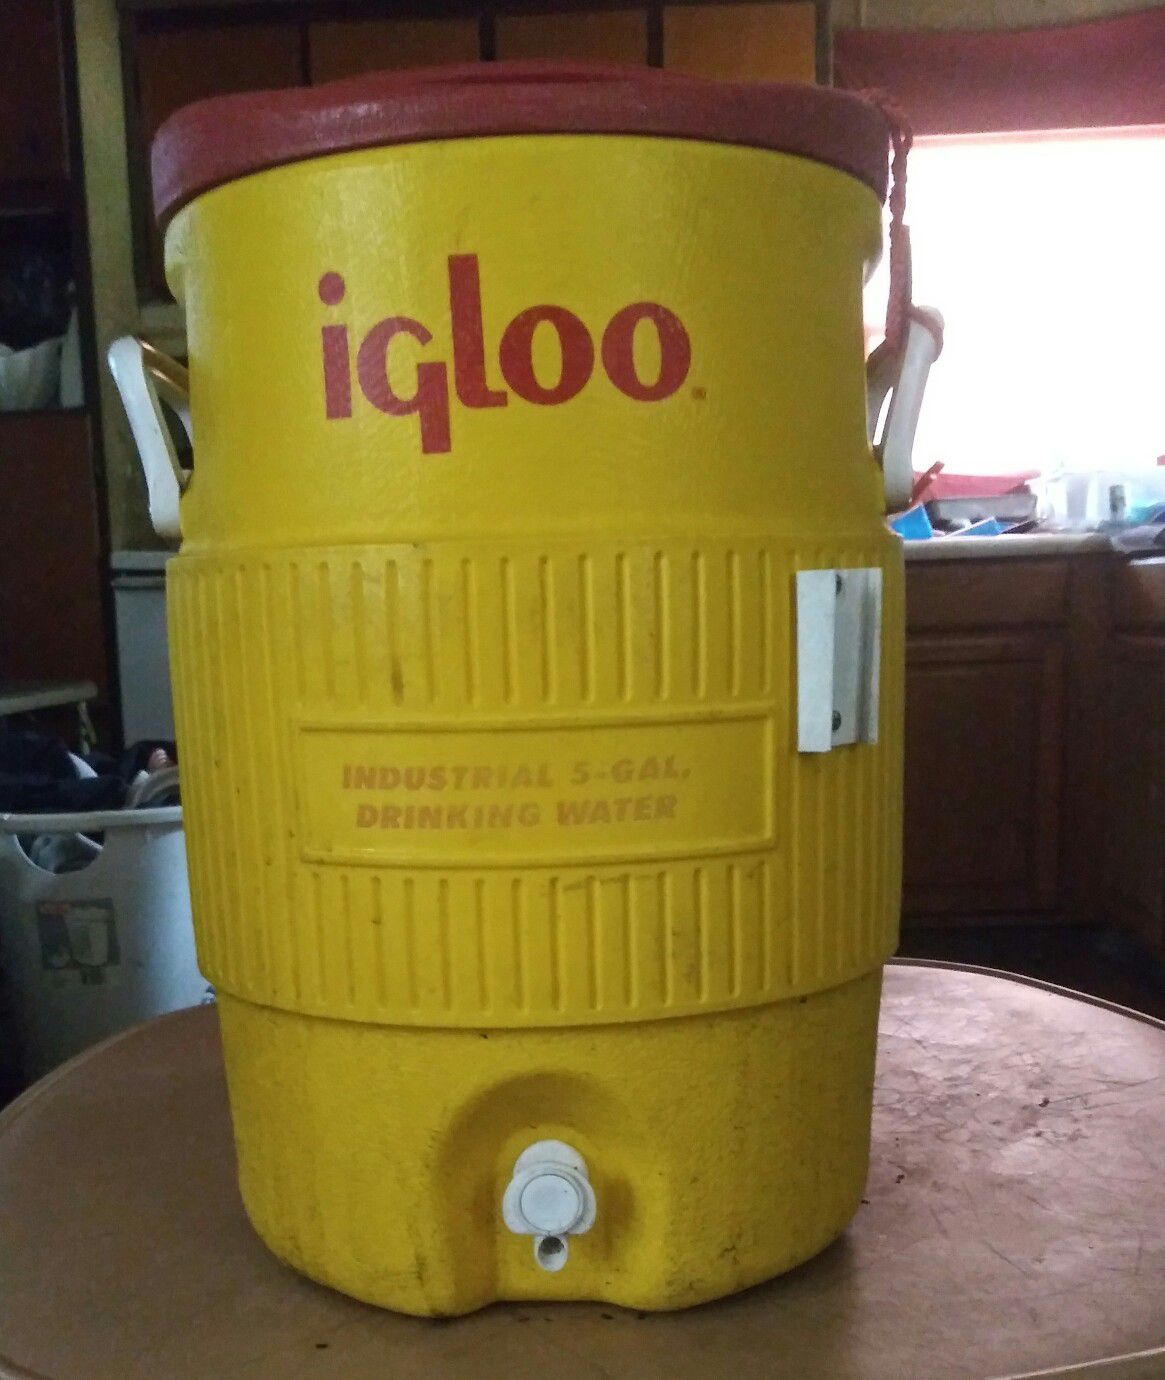 iGloo cooler